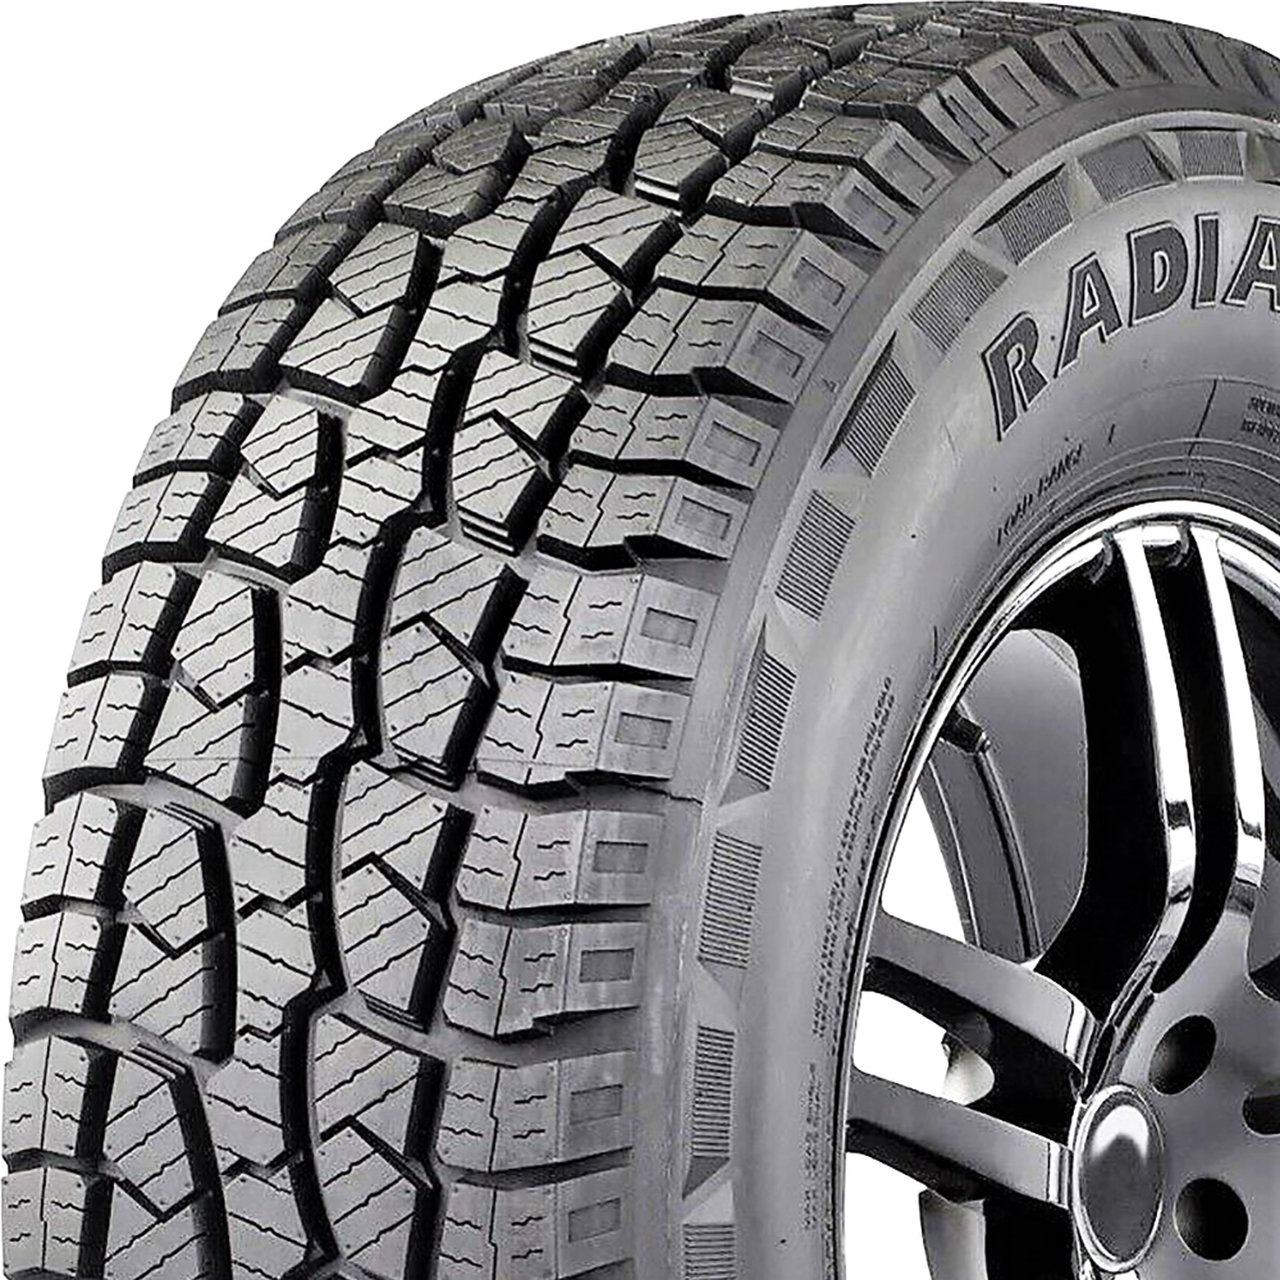 Buy Westlake SL369 All-Season Radial Tire - LT235/75R15 104Q Online in  Taiwan. B0798DW5GS